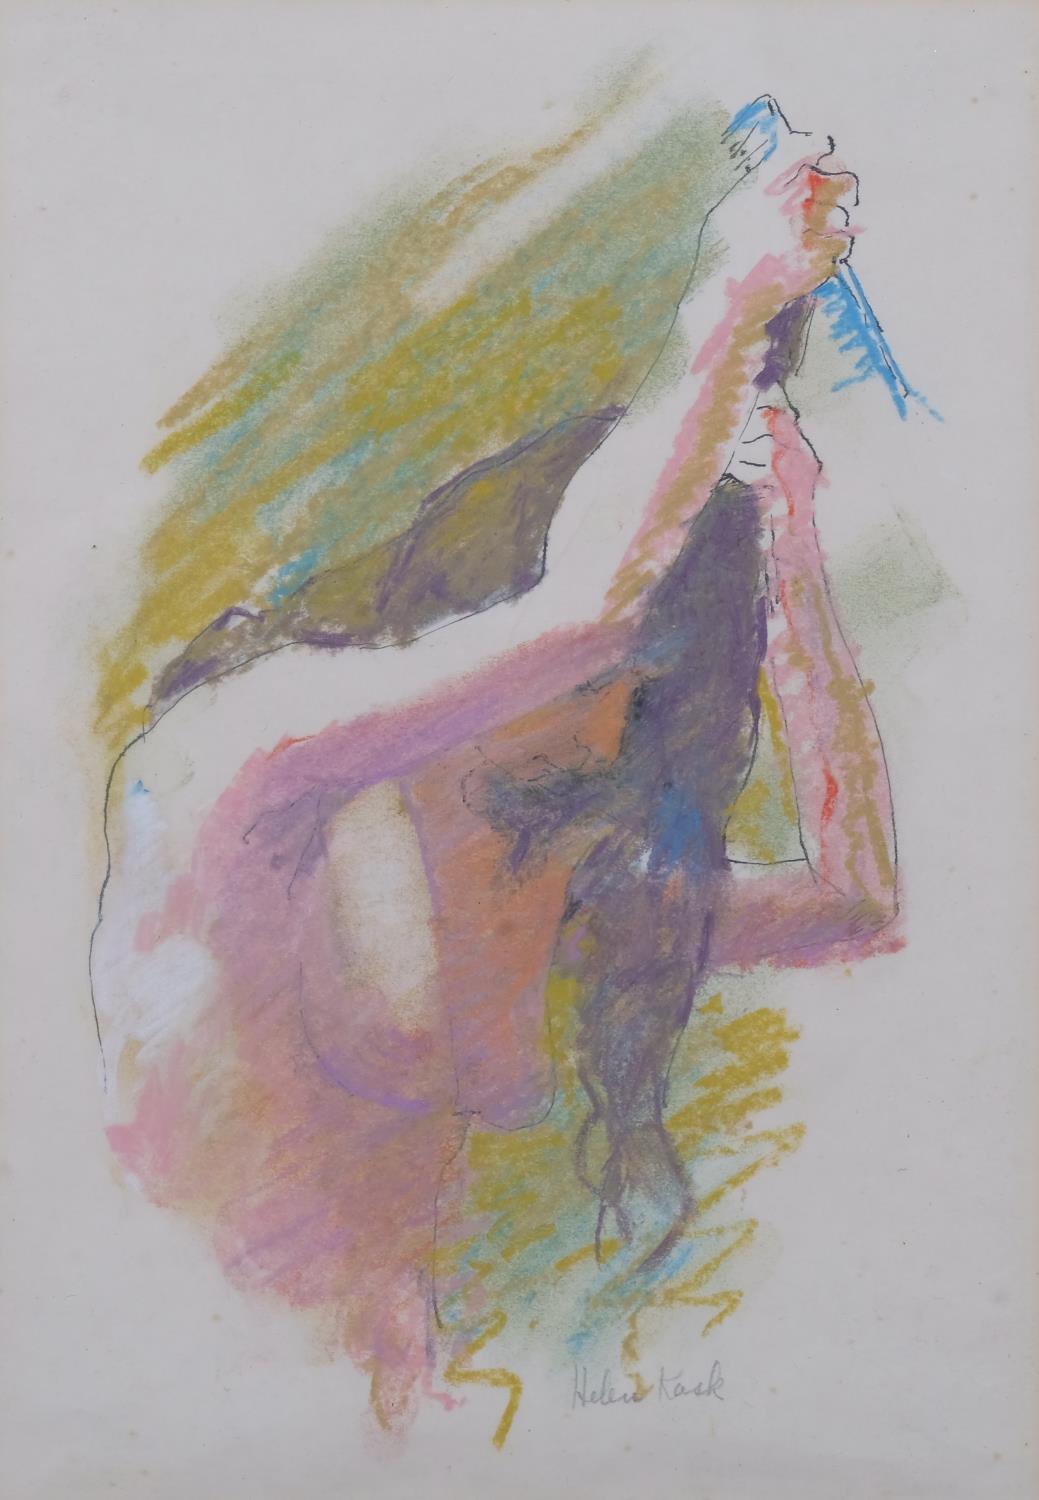 Helen Kask, nude study, coloured pastel, signed, 25cm x 17cm, framed